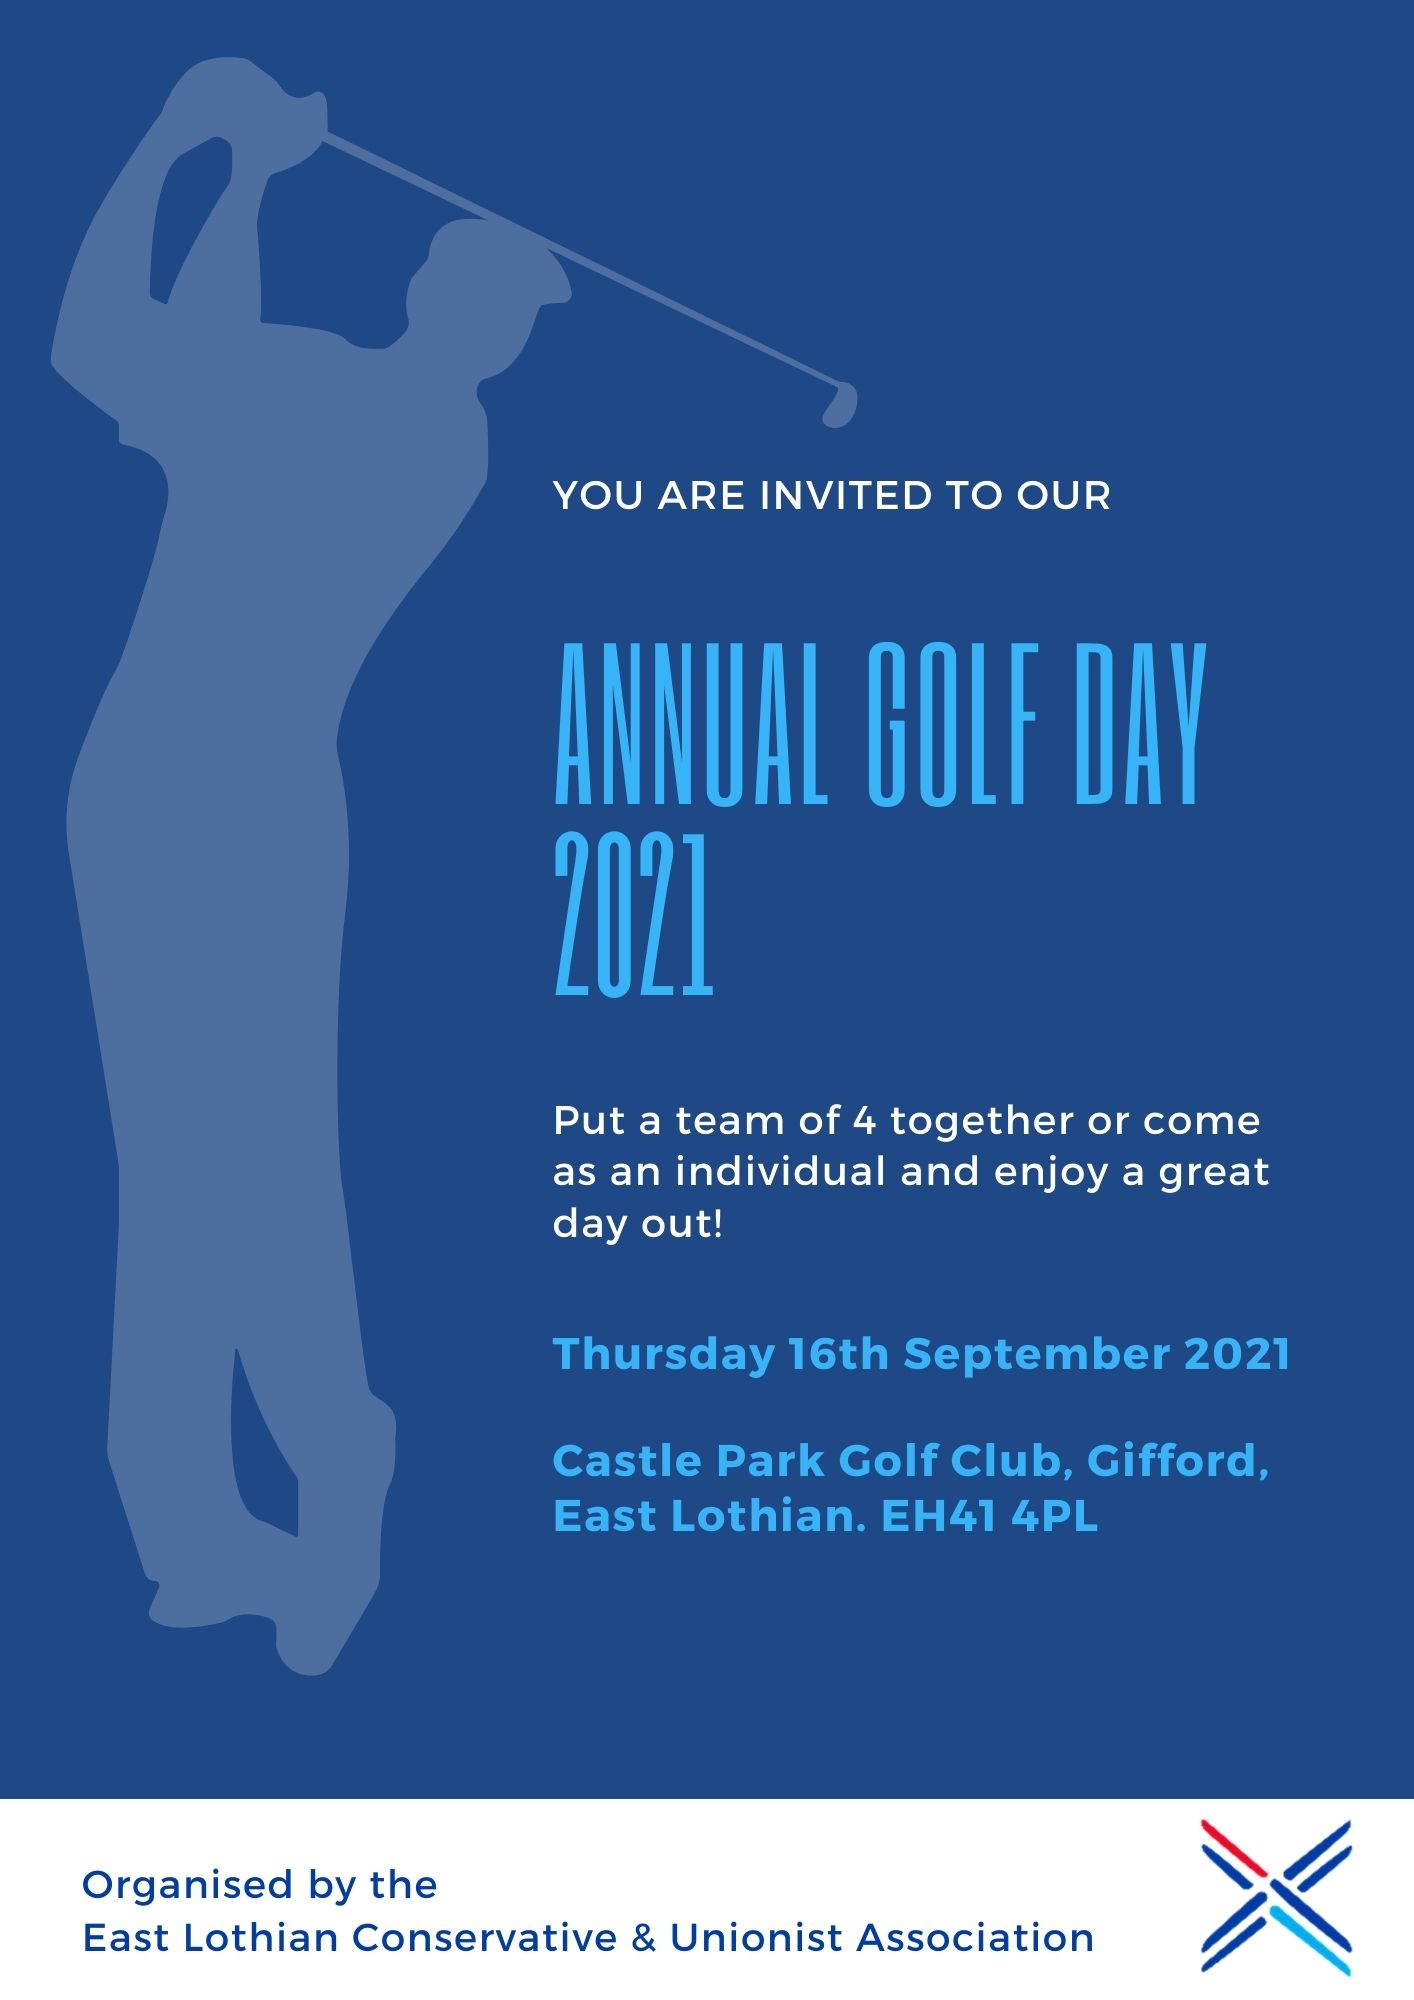 2021 Annual Golf Day, Thursday 16th September, Castle Park, Gifford. For more information email: admin@eastlothianconservatives.com